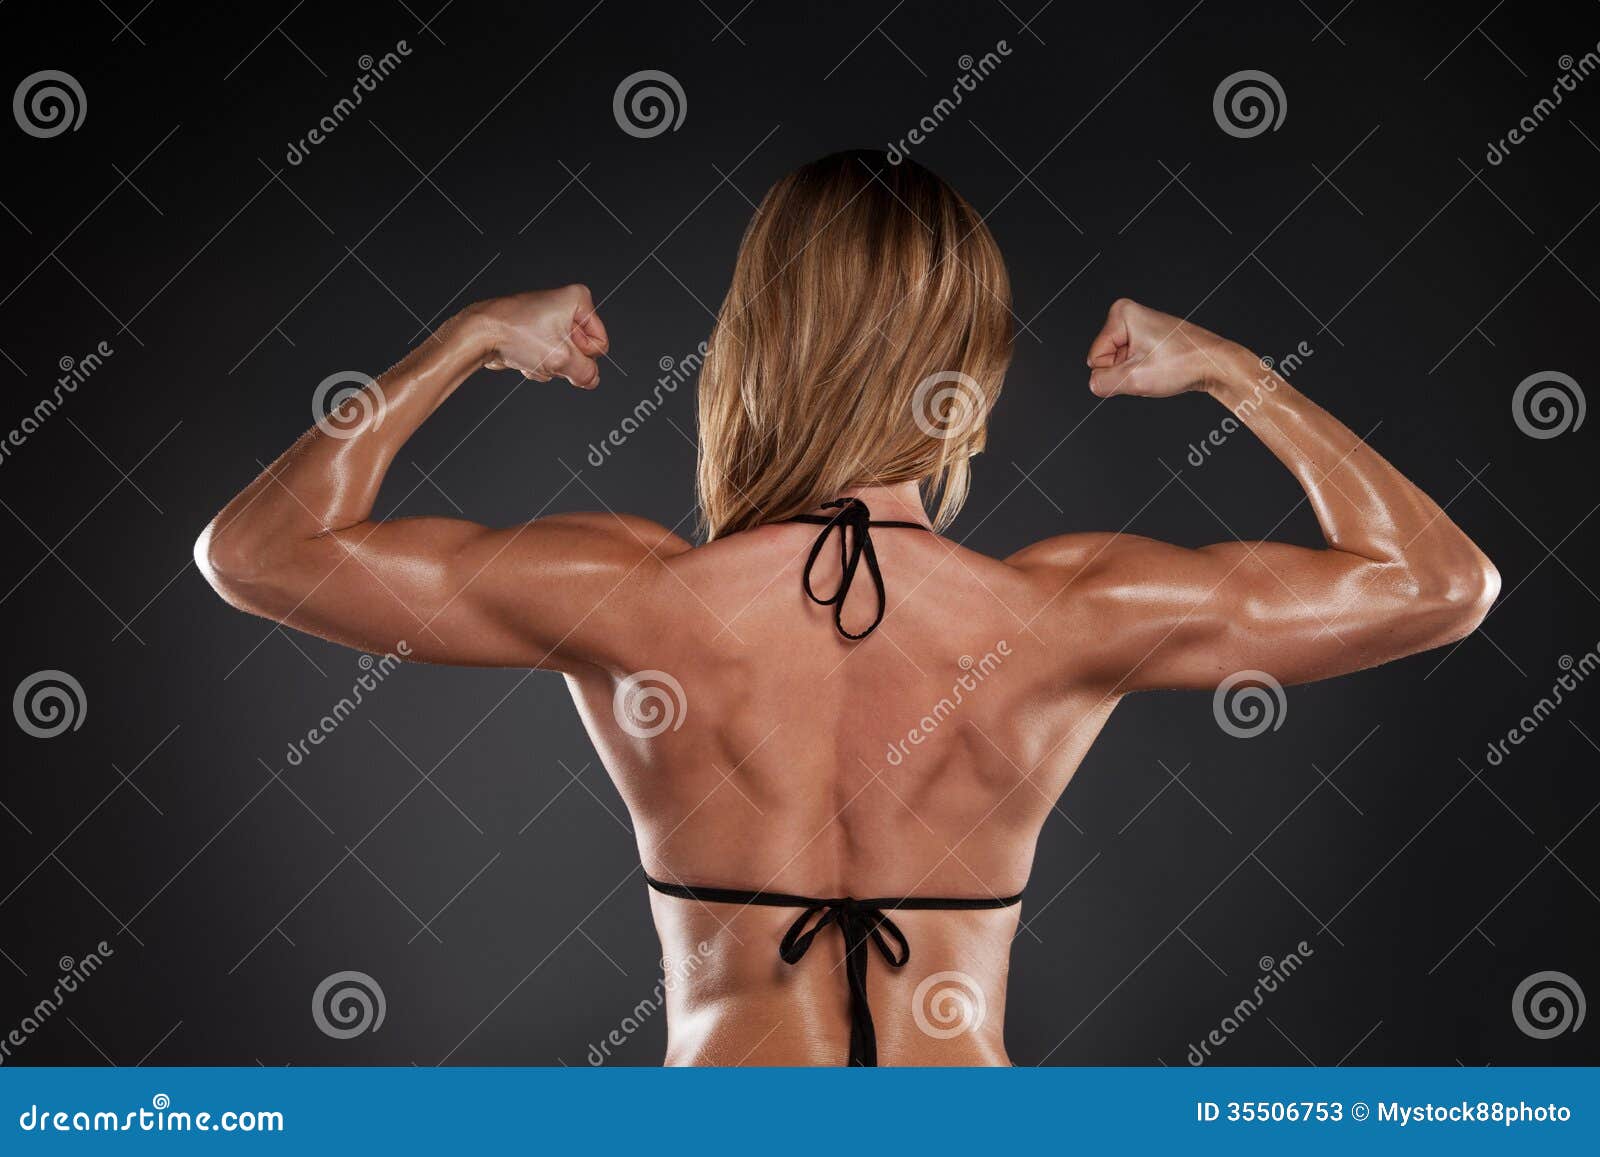 https://thumbs.dreamstime.com/z/muscular-female-back-black-bikini-view-isolated-over-background-35506753.jpg